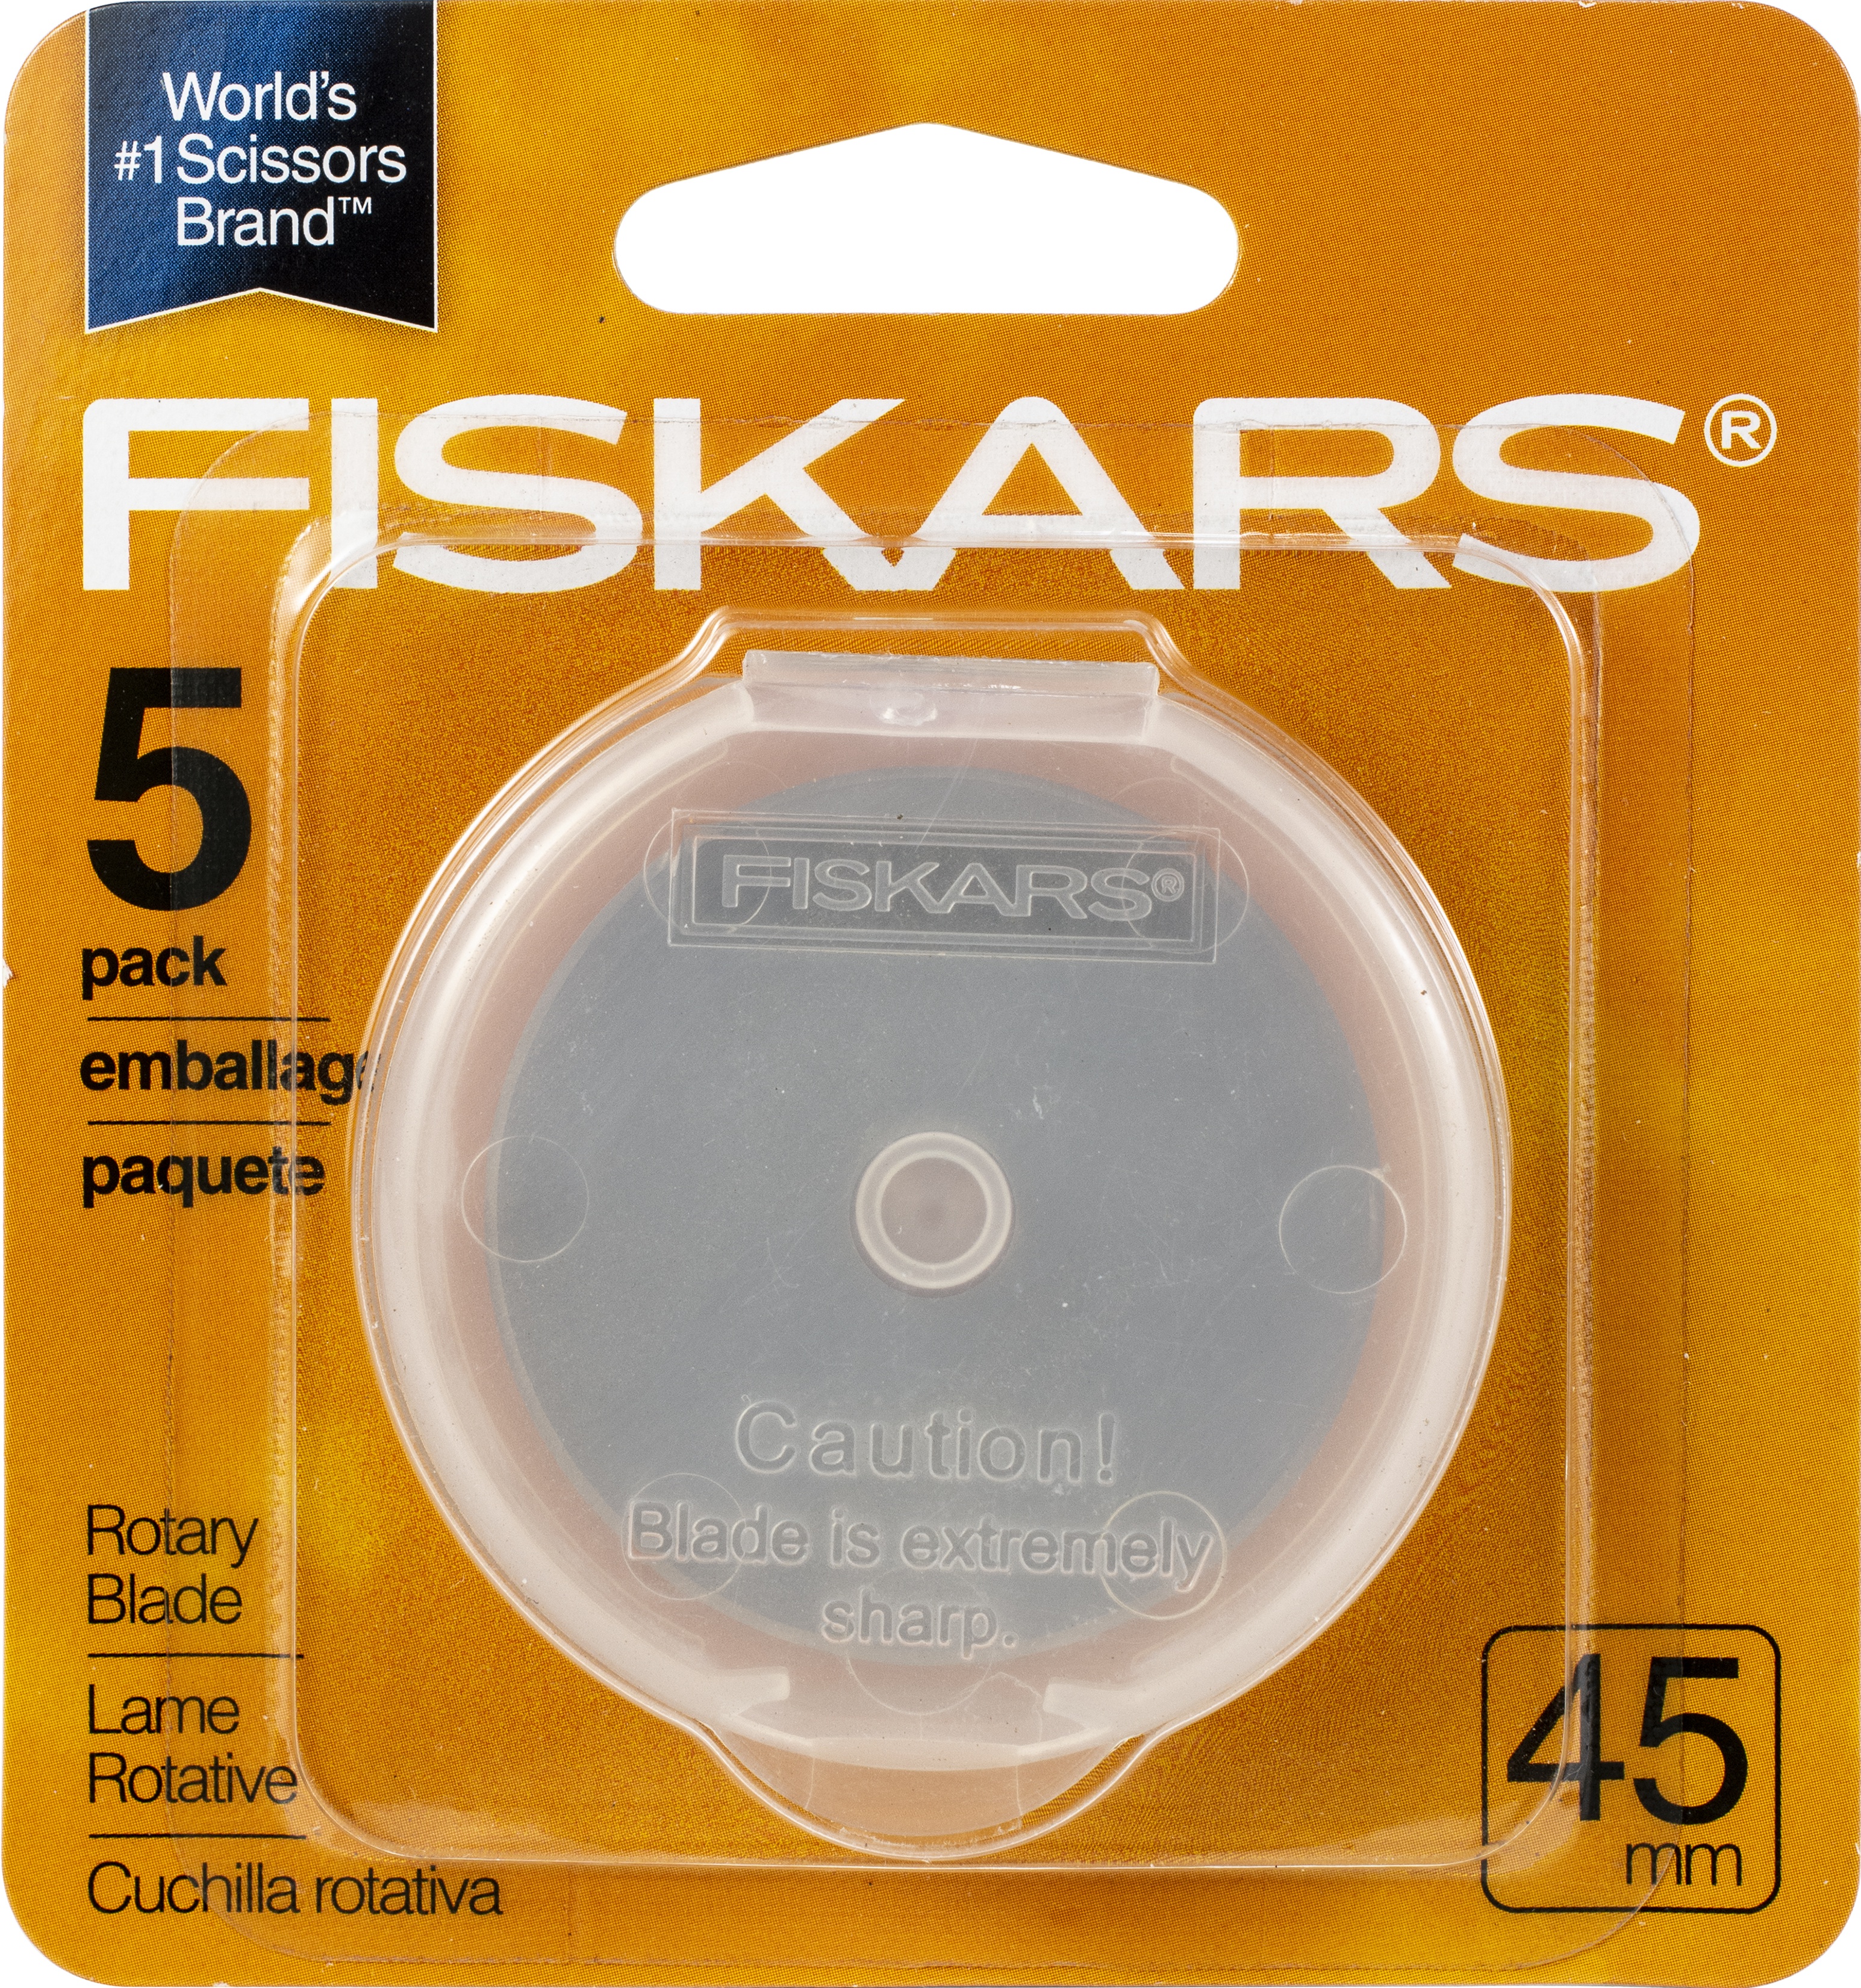 Fiskars® 45mm Rotary Blades, 5ct. - image 2 of 2